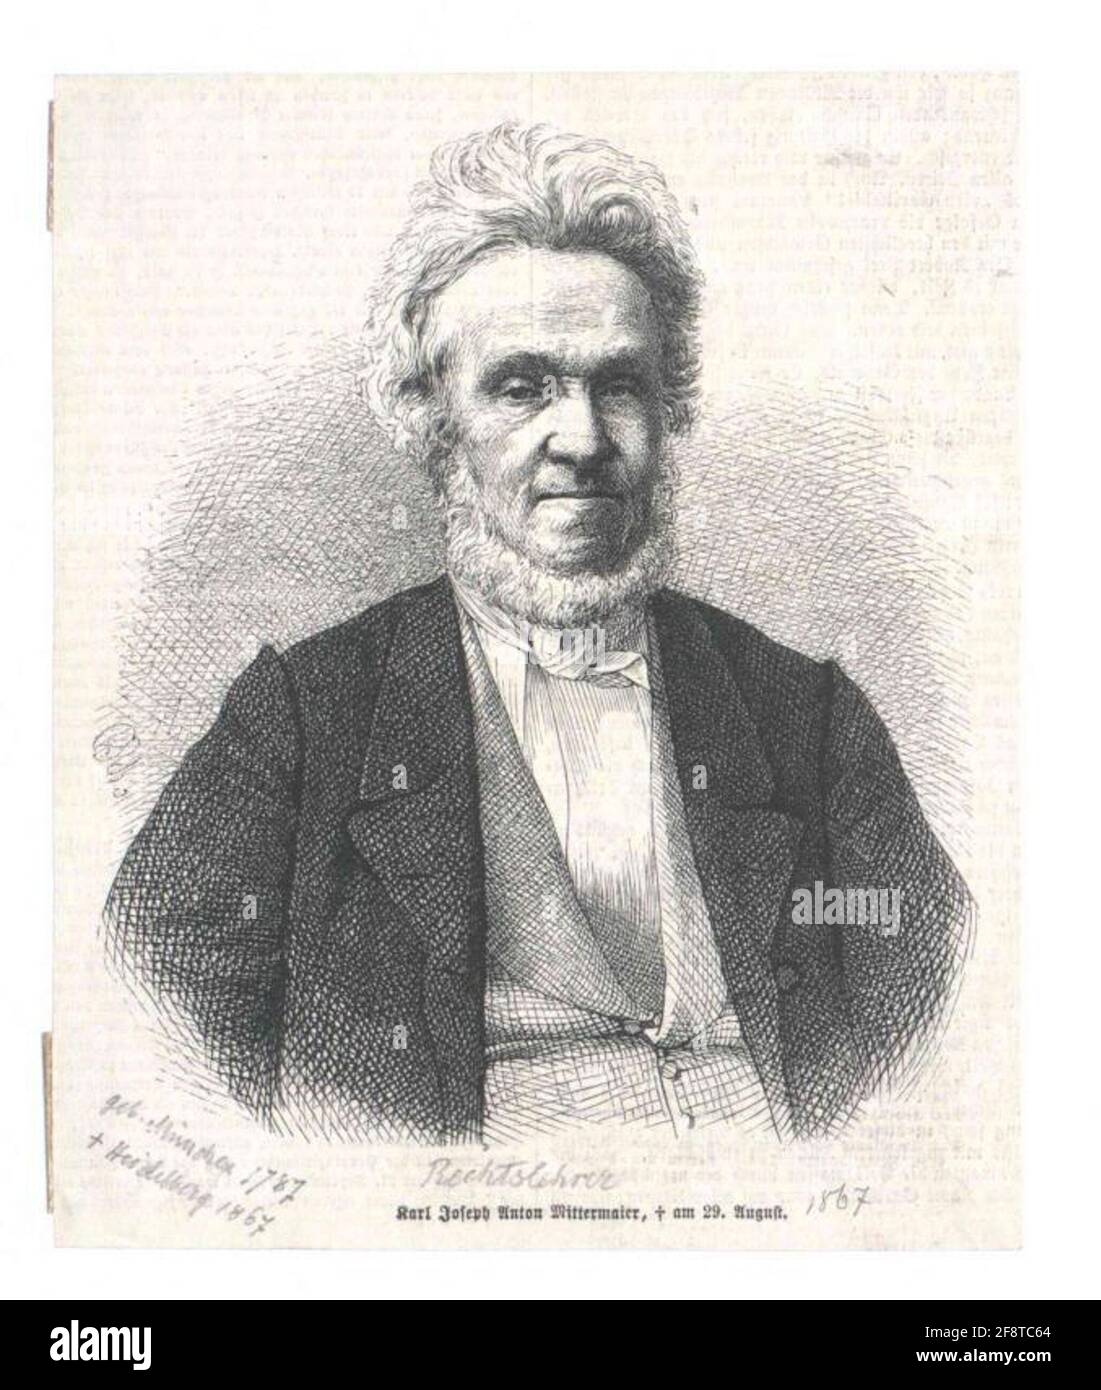 Mittermaier, Karl Josef Anton. Stock Photo